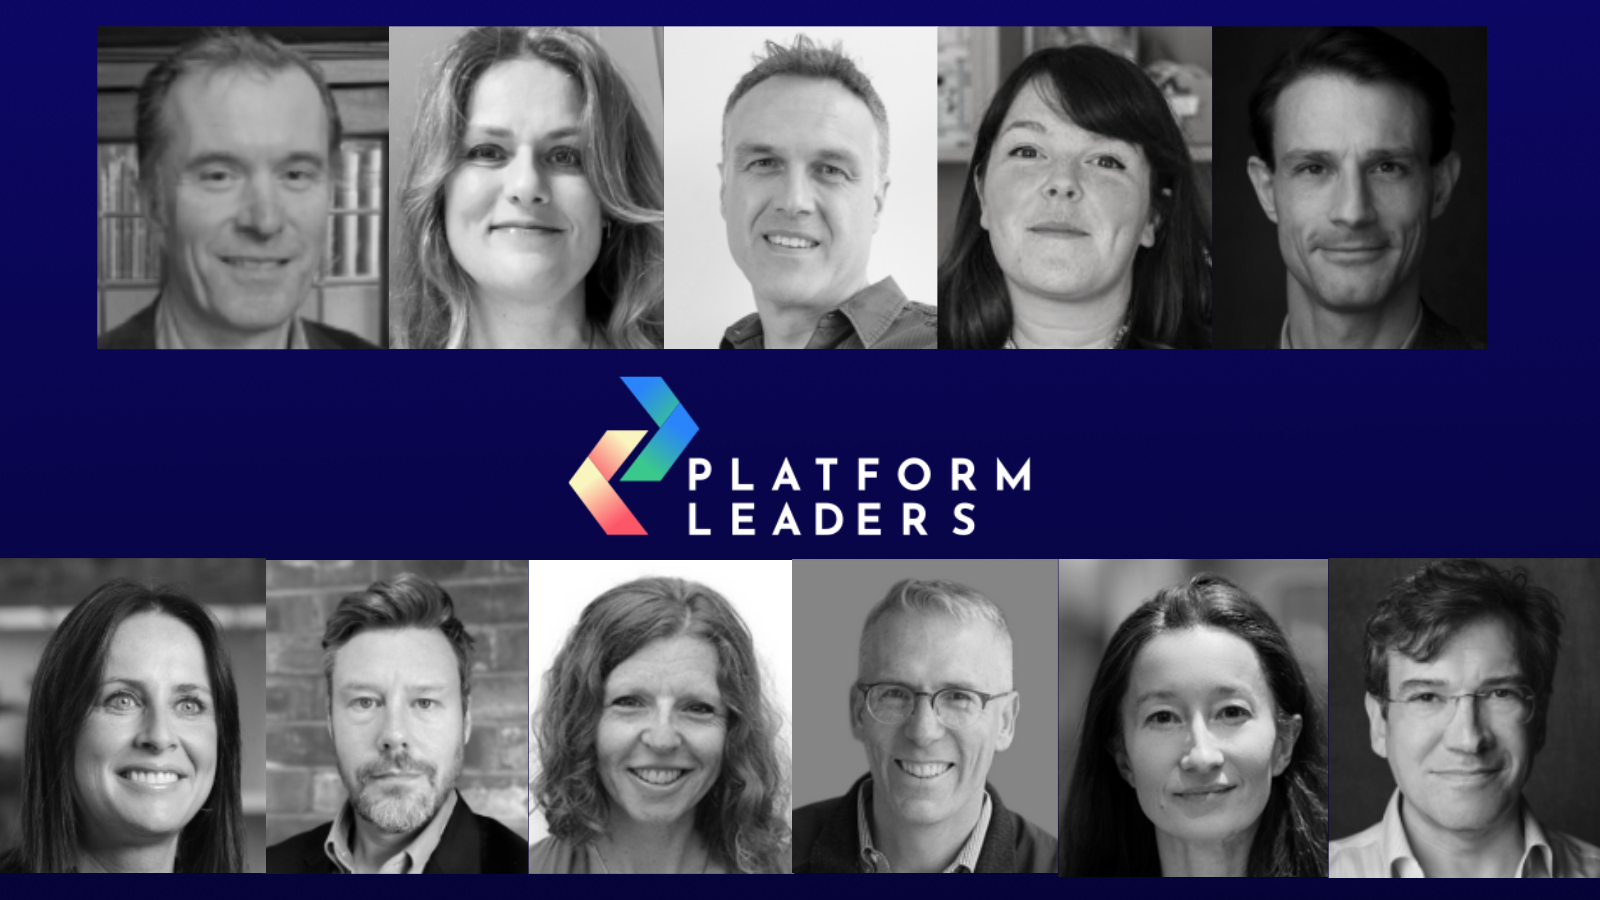 Tomorrow’s digital platform economy – today with Platform Leaders